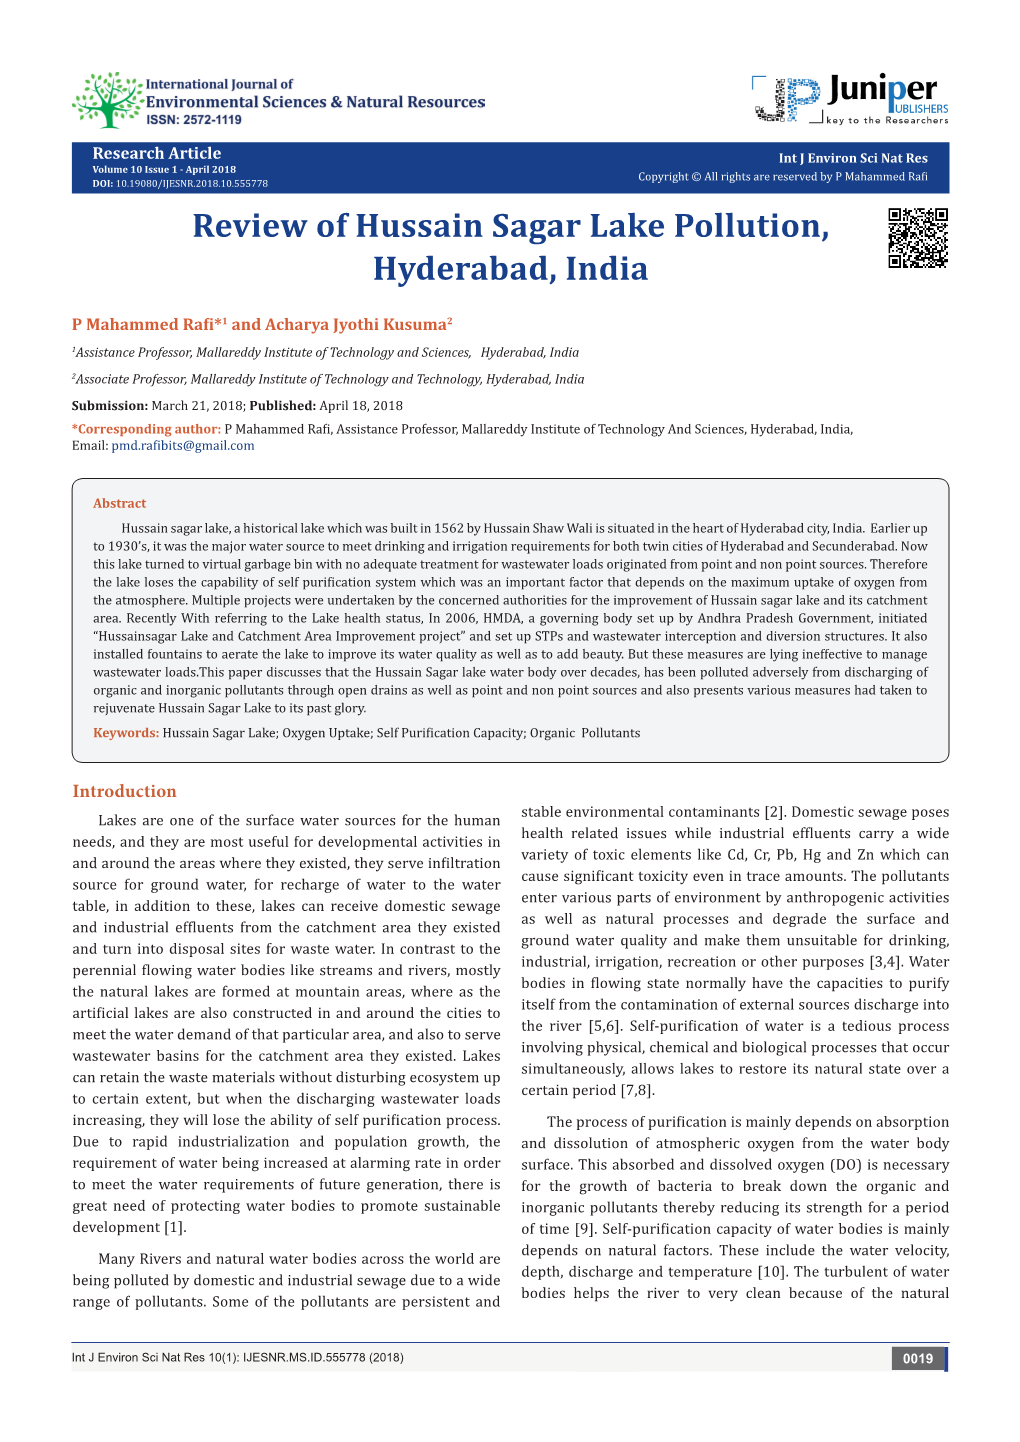 Review of Hussain Sagar Lake Pollution, Hyderabad, India